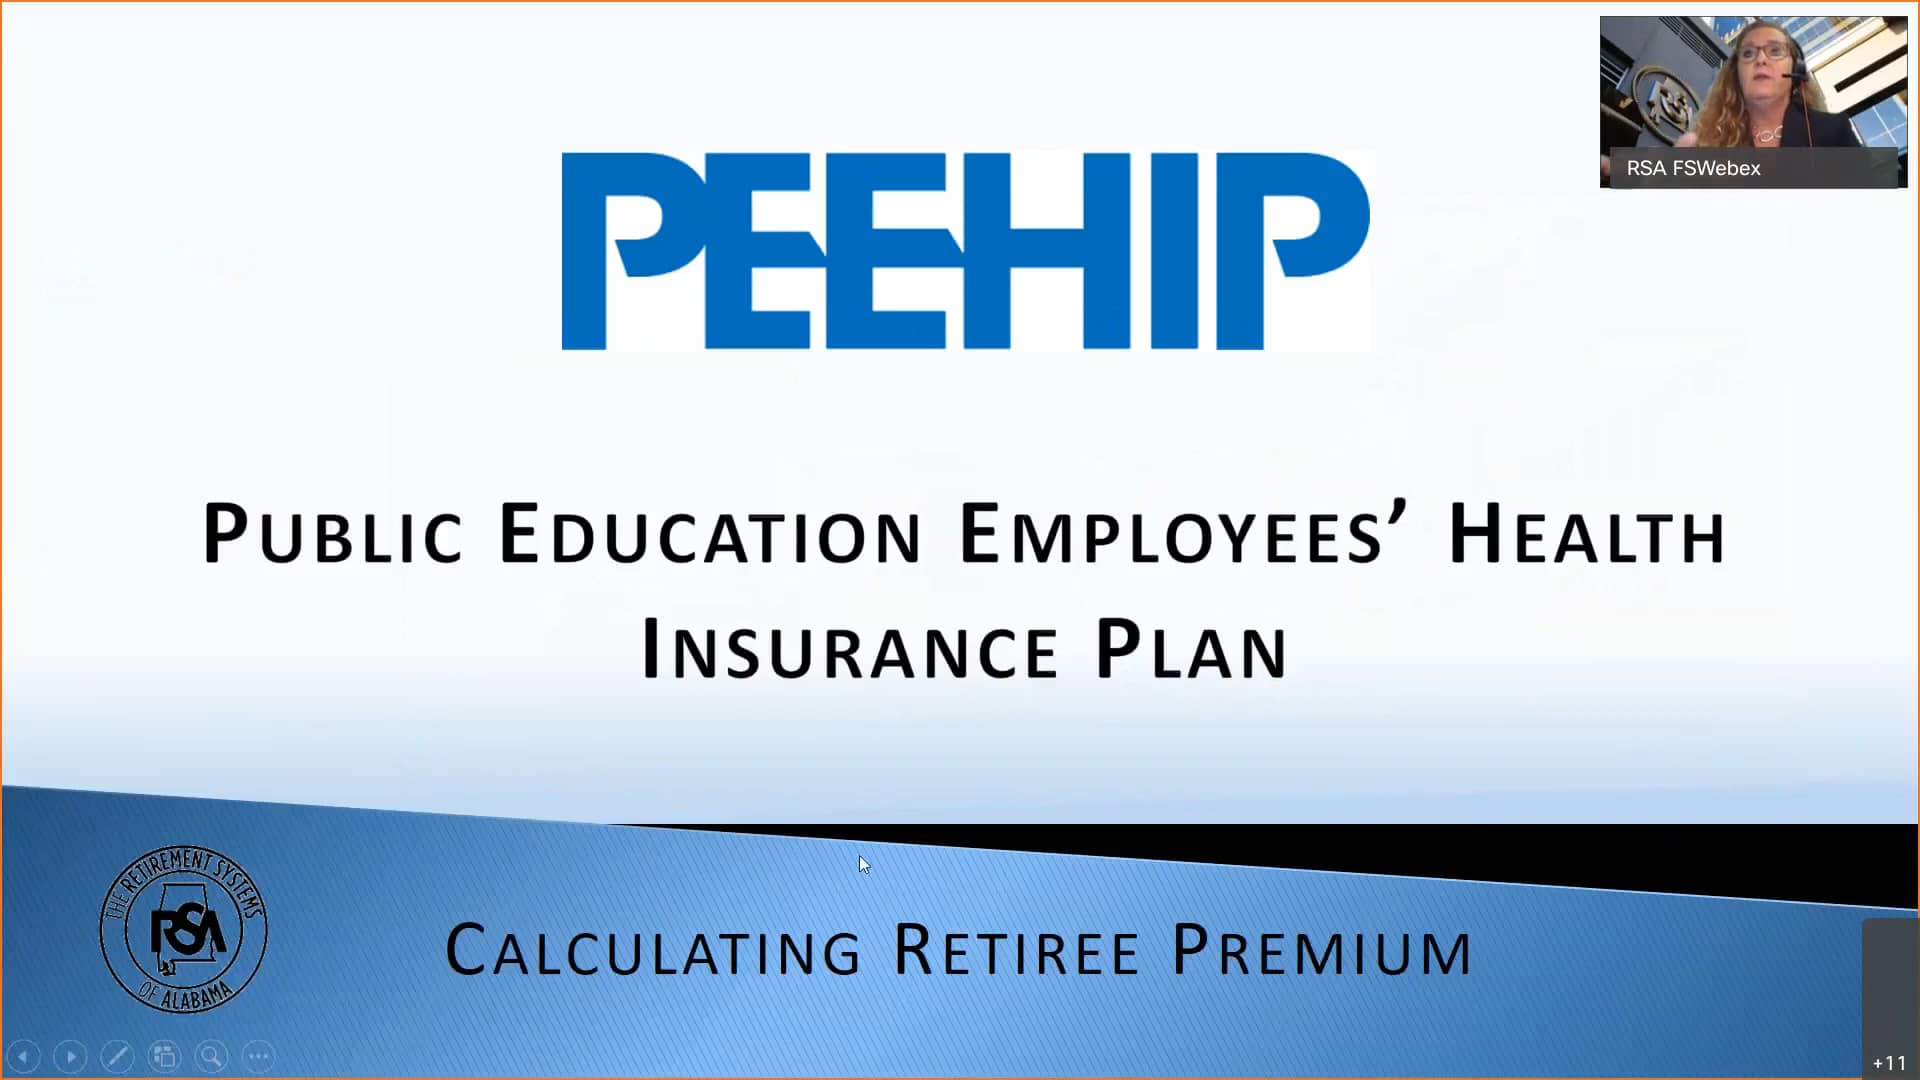 Calculating Your PEEHIP Retiree Premium on Vimeo